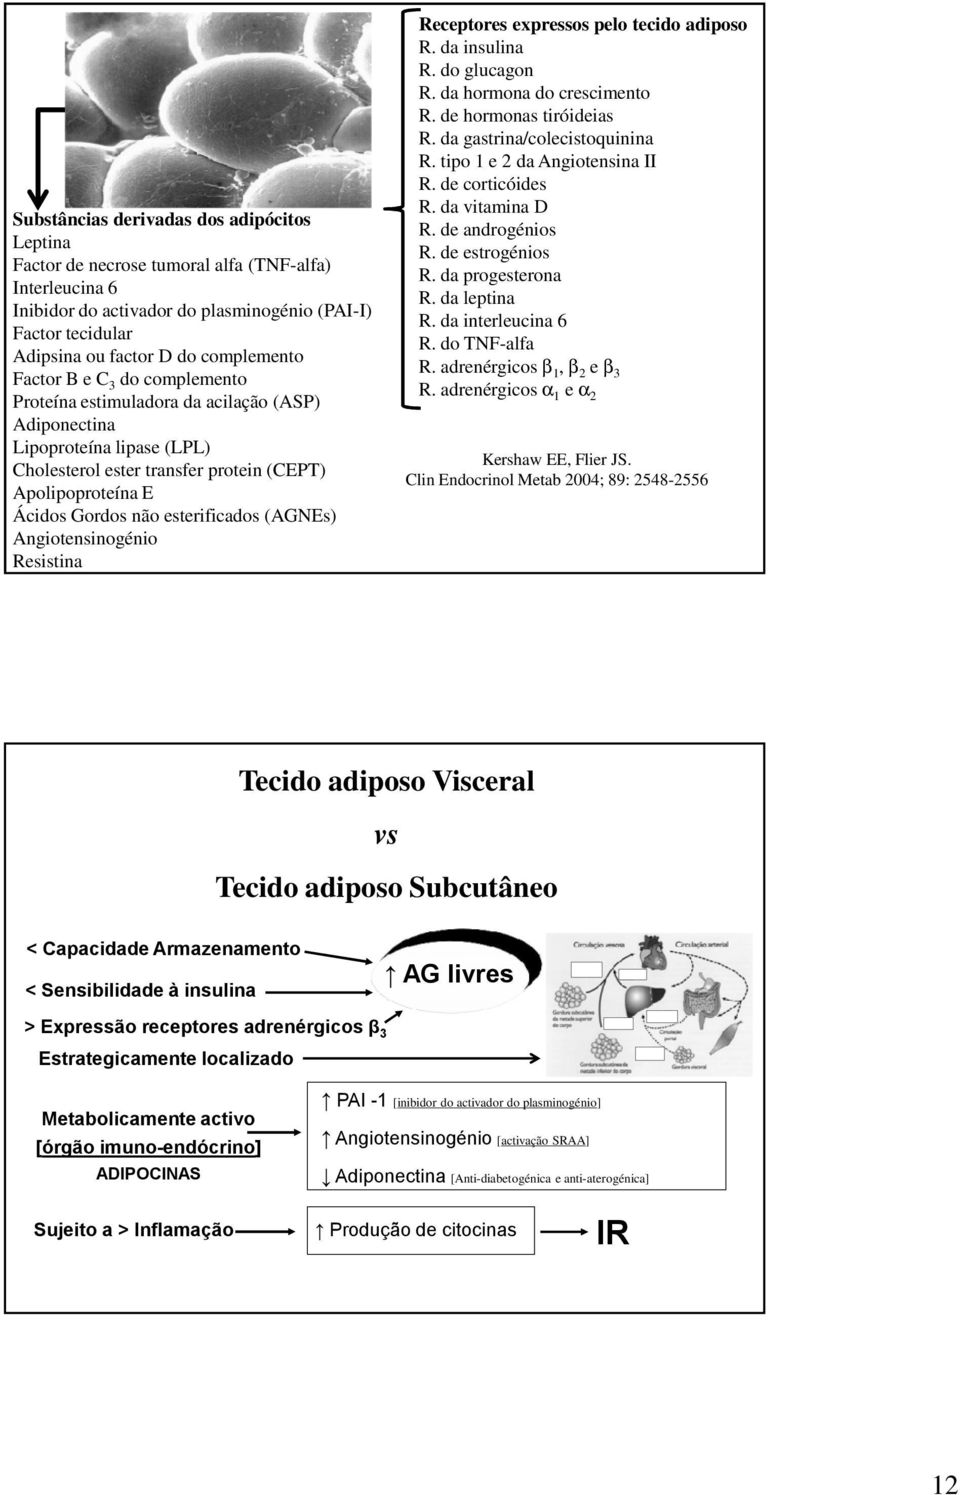 adrenérgicos α1 e α2 Substâncias derivadas dos adipócitos Leptina Factor de necrose tumoral alfa (TNF-alfa) Interleucina 6 Inibidor do activador do plasminogénio (PAI-I) Factor tecidular Adipsina ou